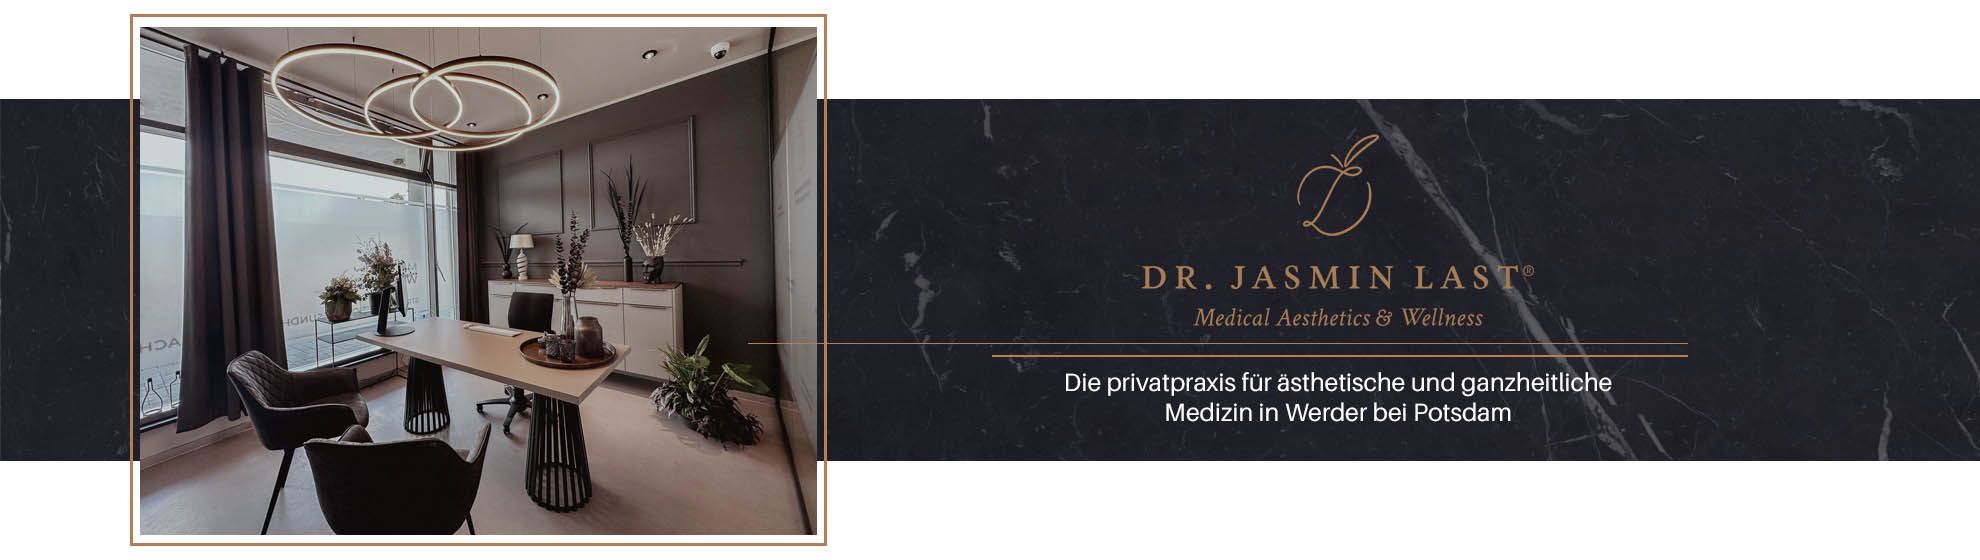 Dr. Jasmin Last - Medical Aesthetics & Wellness